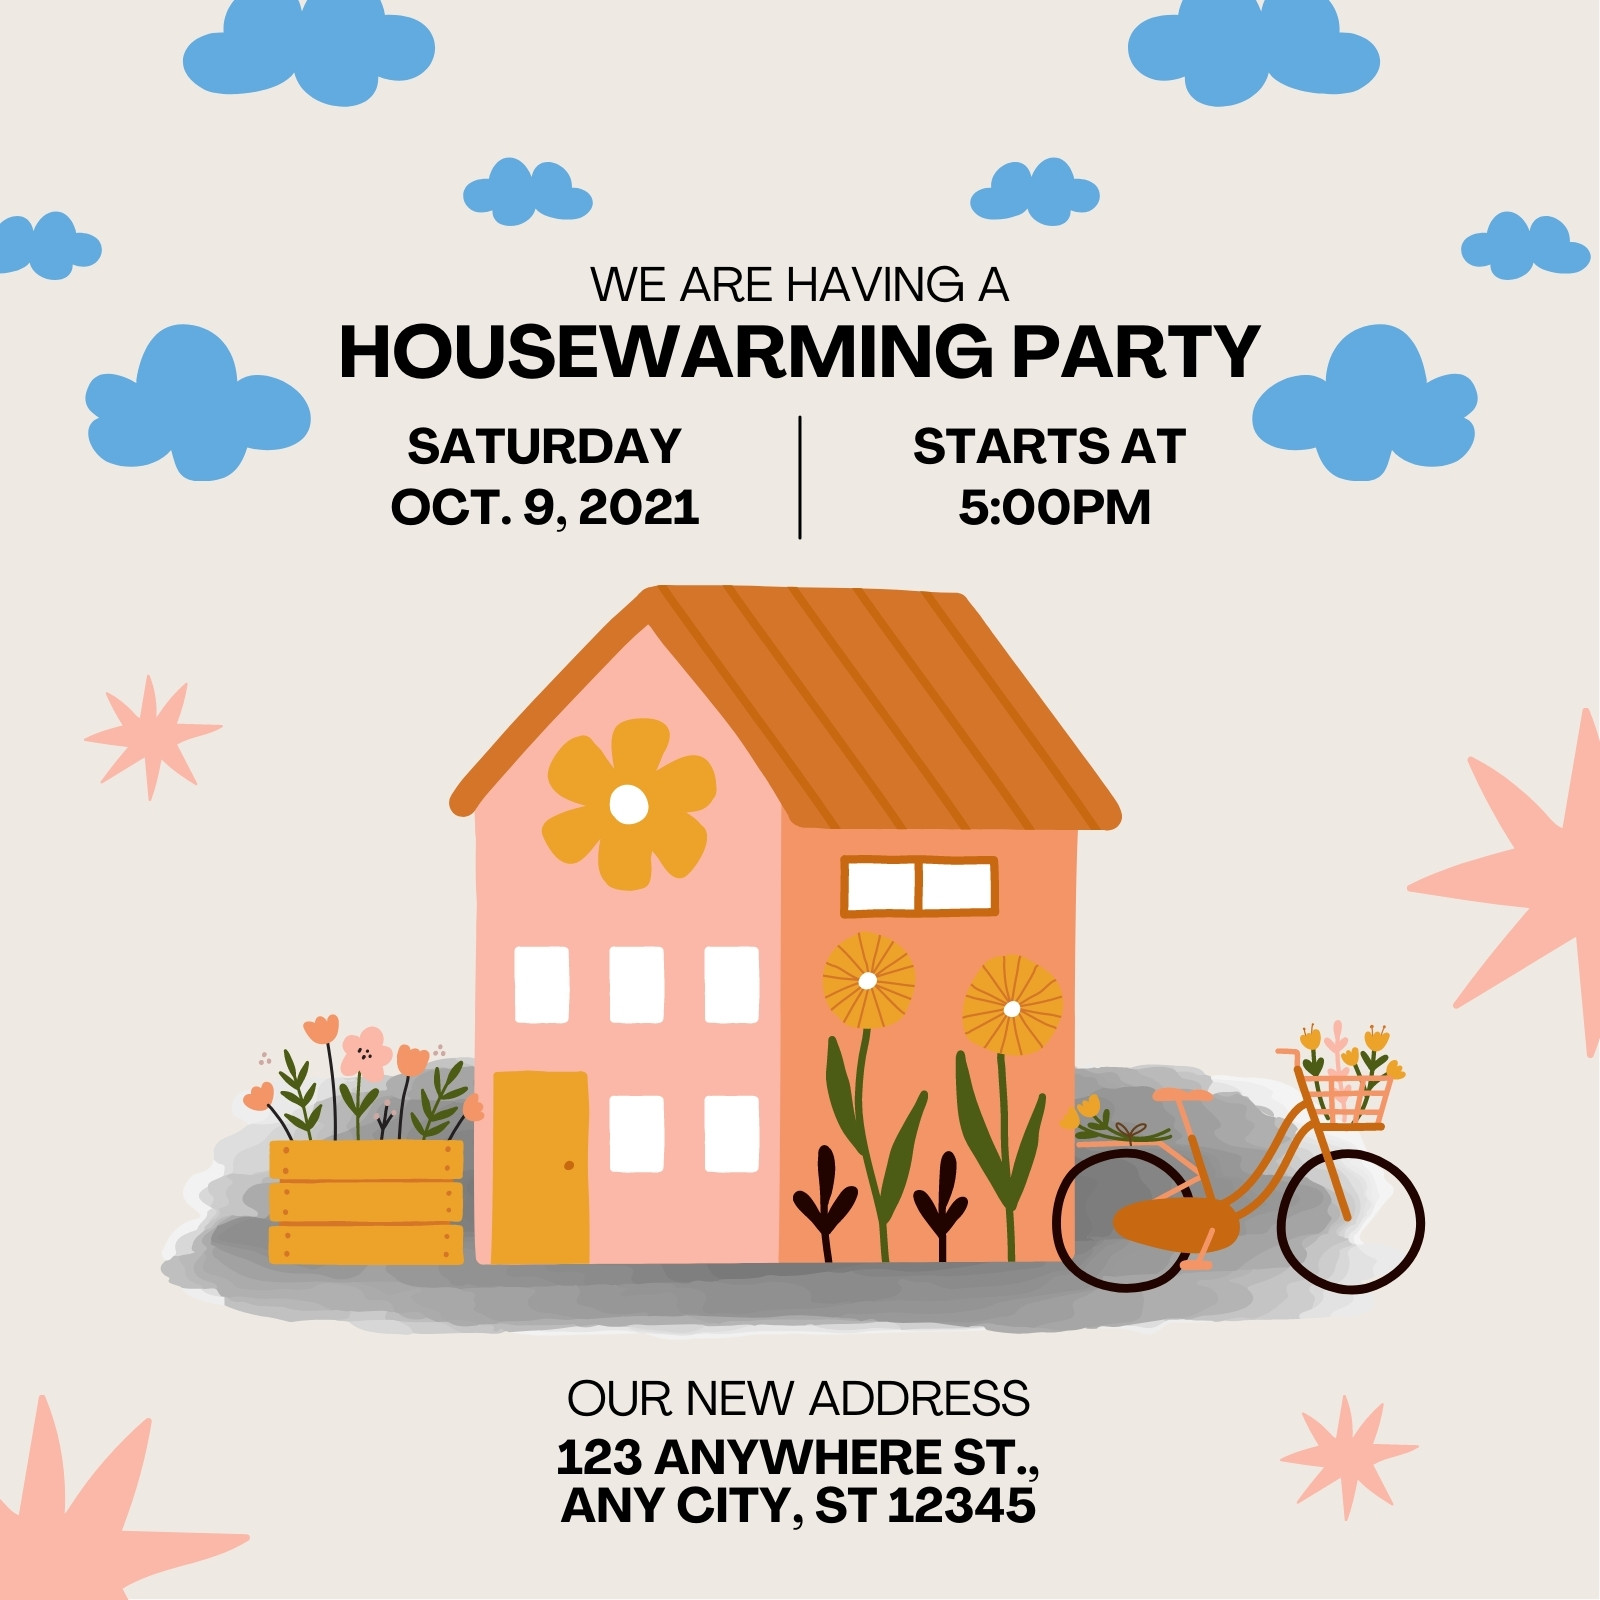 https://marketplace.canva.com/EAEsK29tW18/1/0/1600w/canva-beige-with-cute-house-illustration-housewarming-invitation-YNudXO2KYk8.jpg